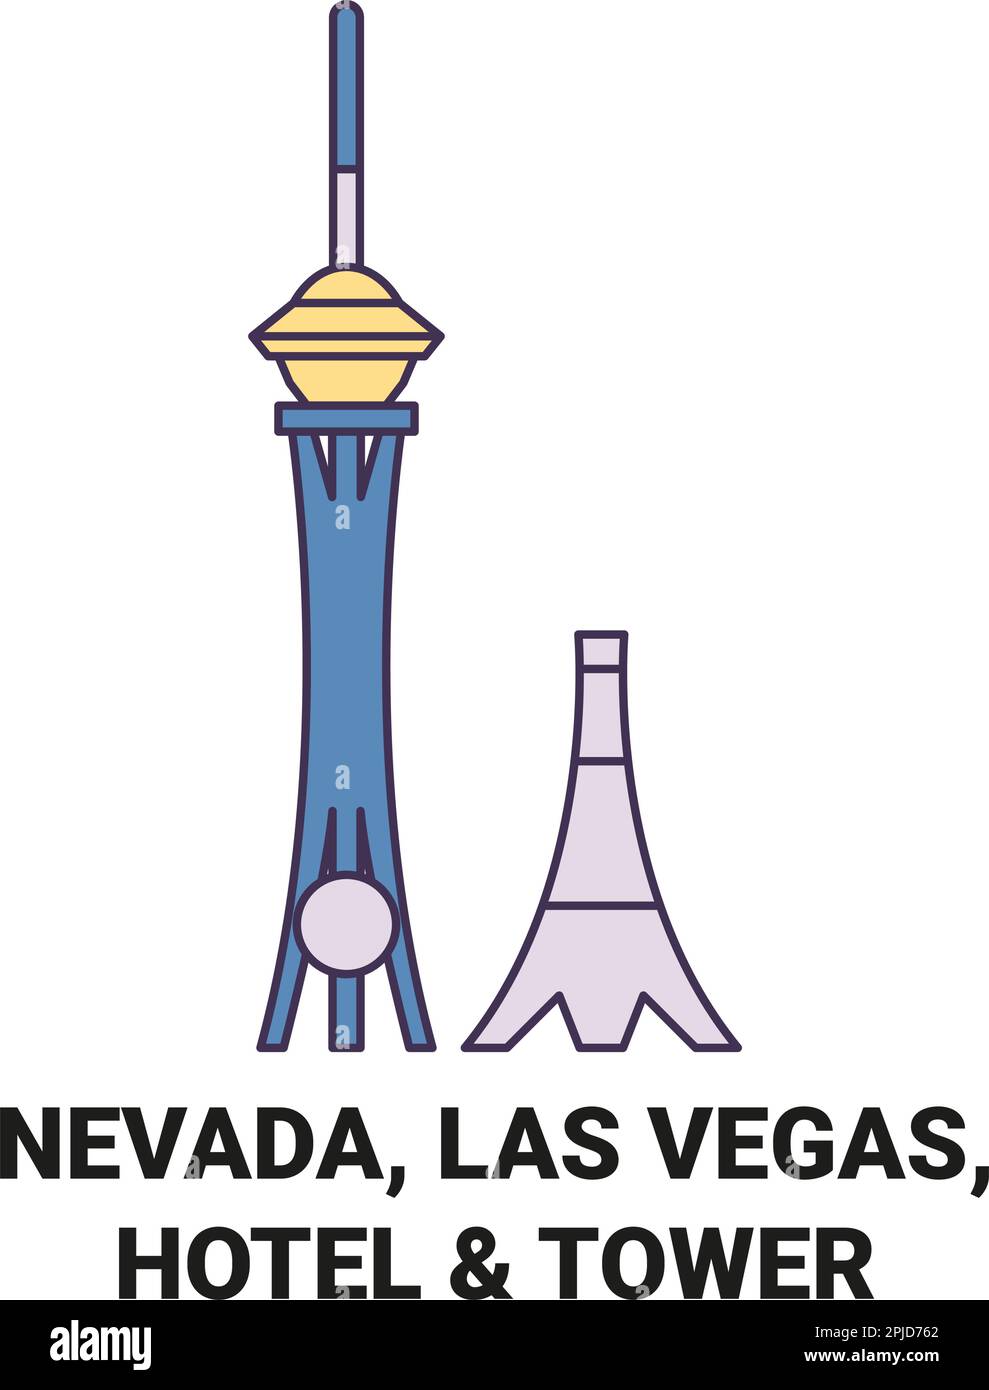 United States, Nevada, Las Vegas, Hotel & Tower travel landmark vector illustration Stock Vector